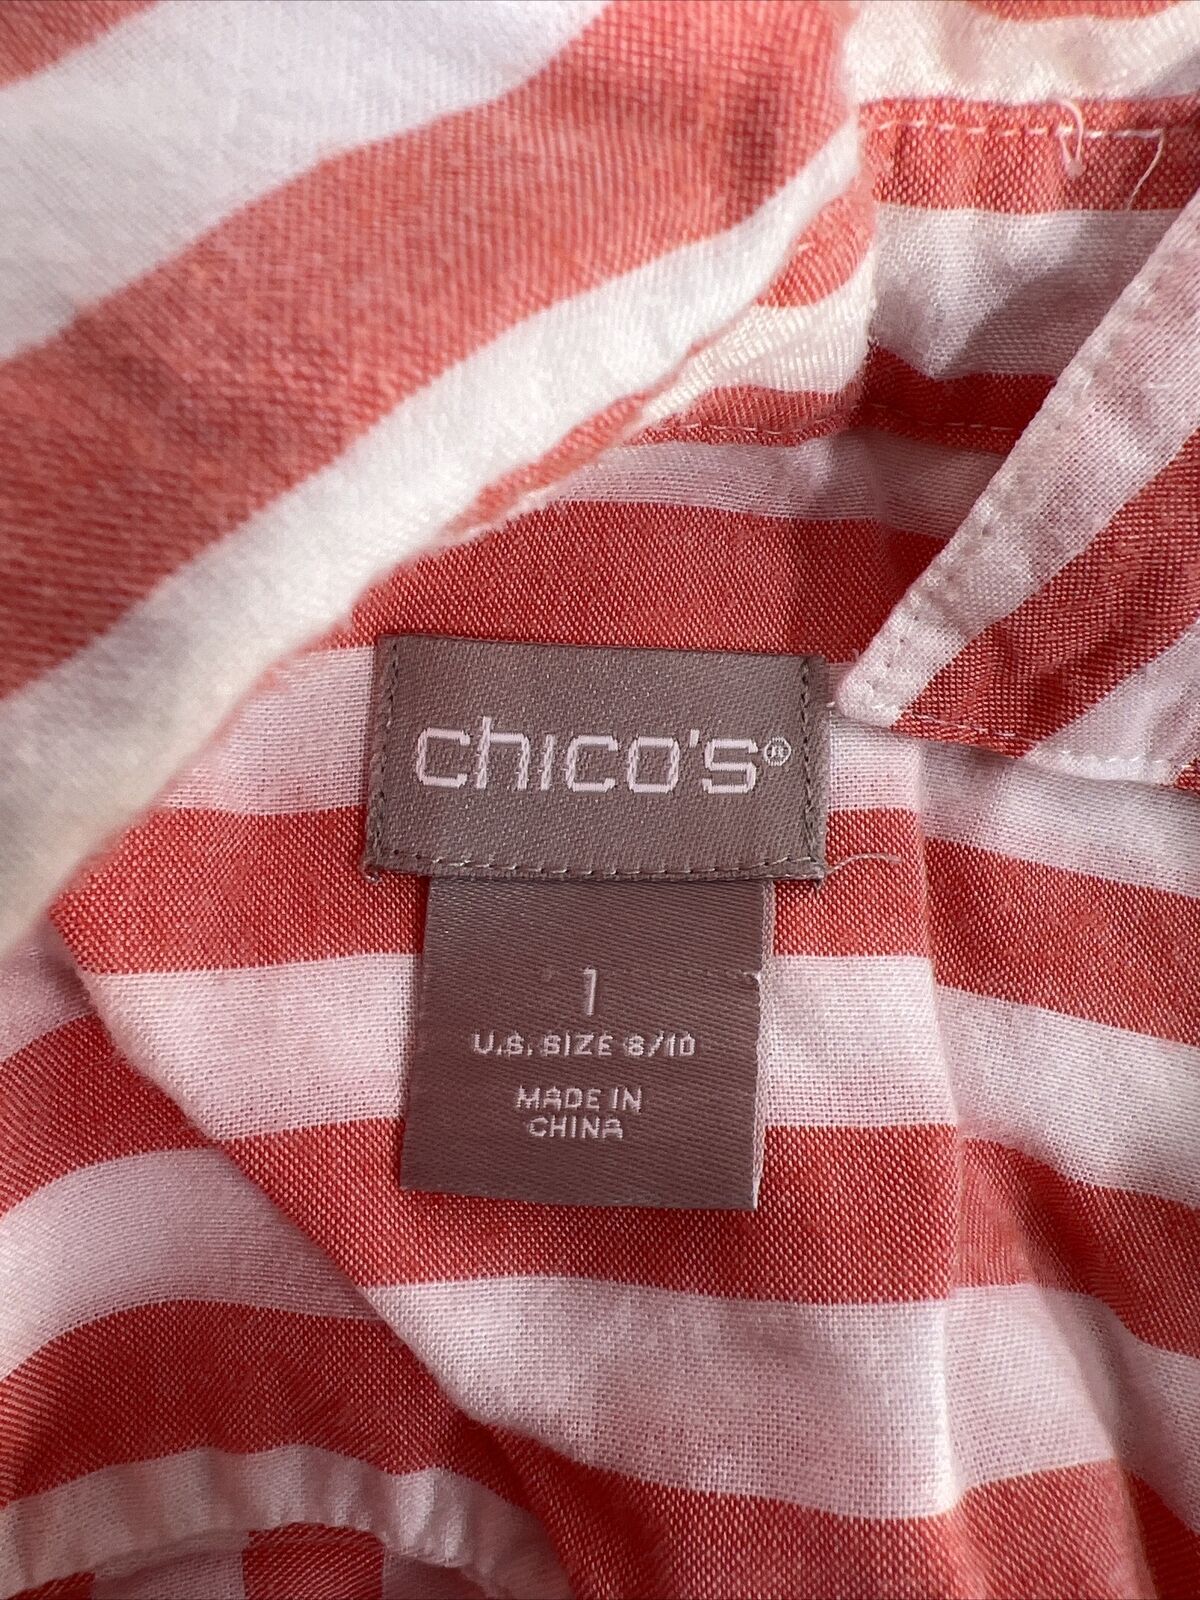 Chico's Women's Orange Striped Long Sleeve Button Up Tunic Shirt - 1/US 8